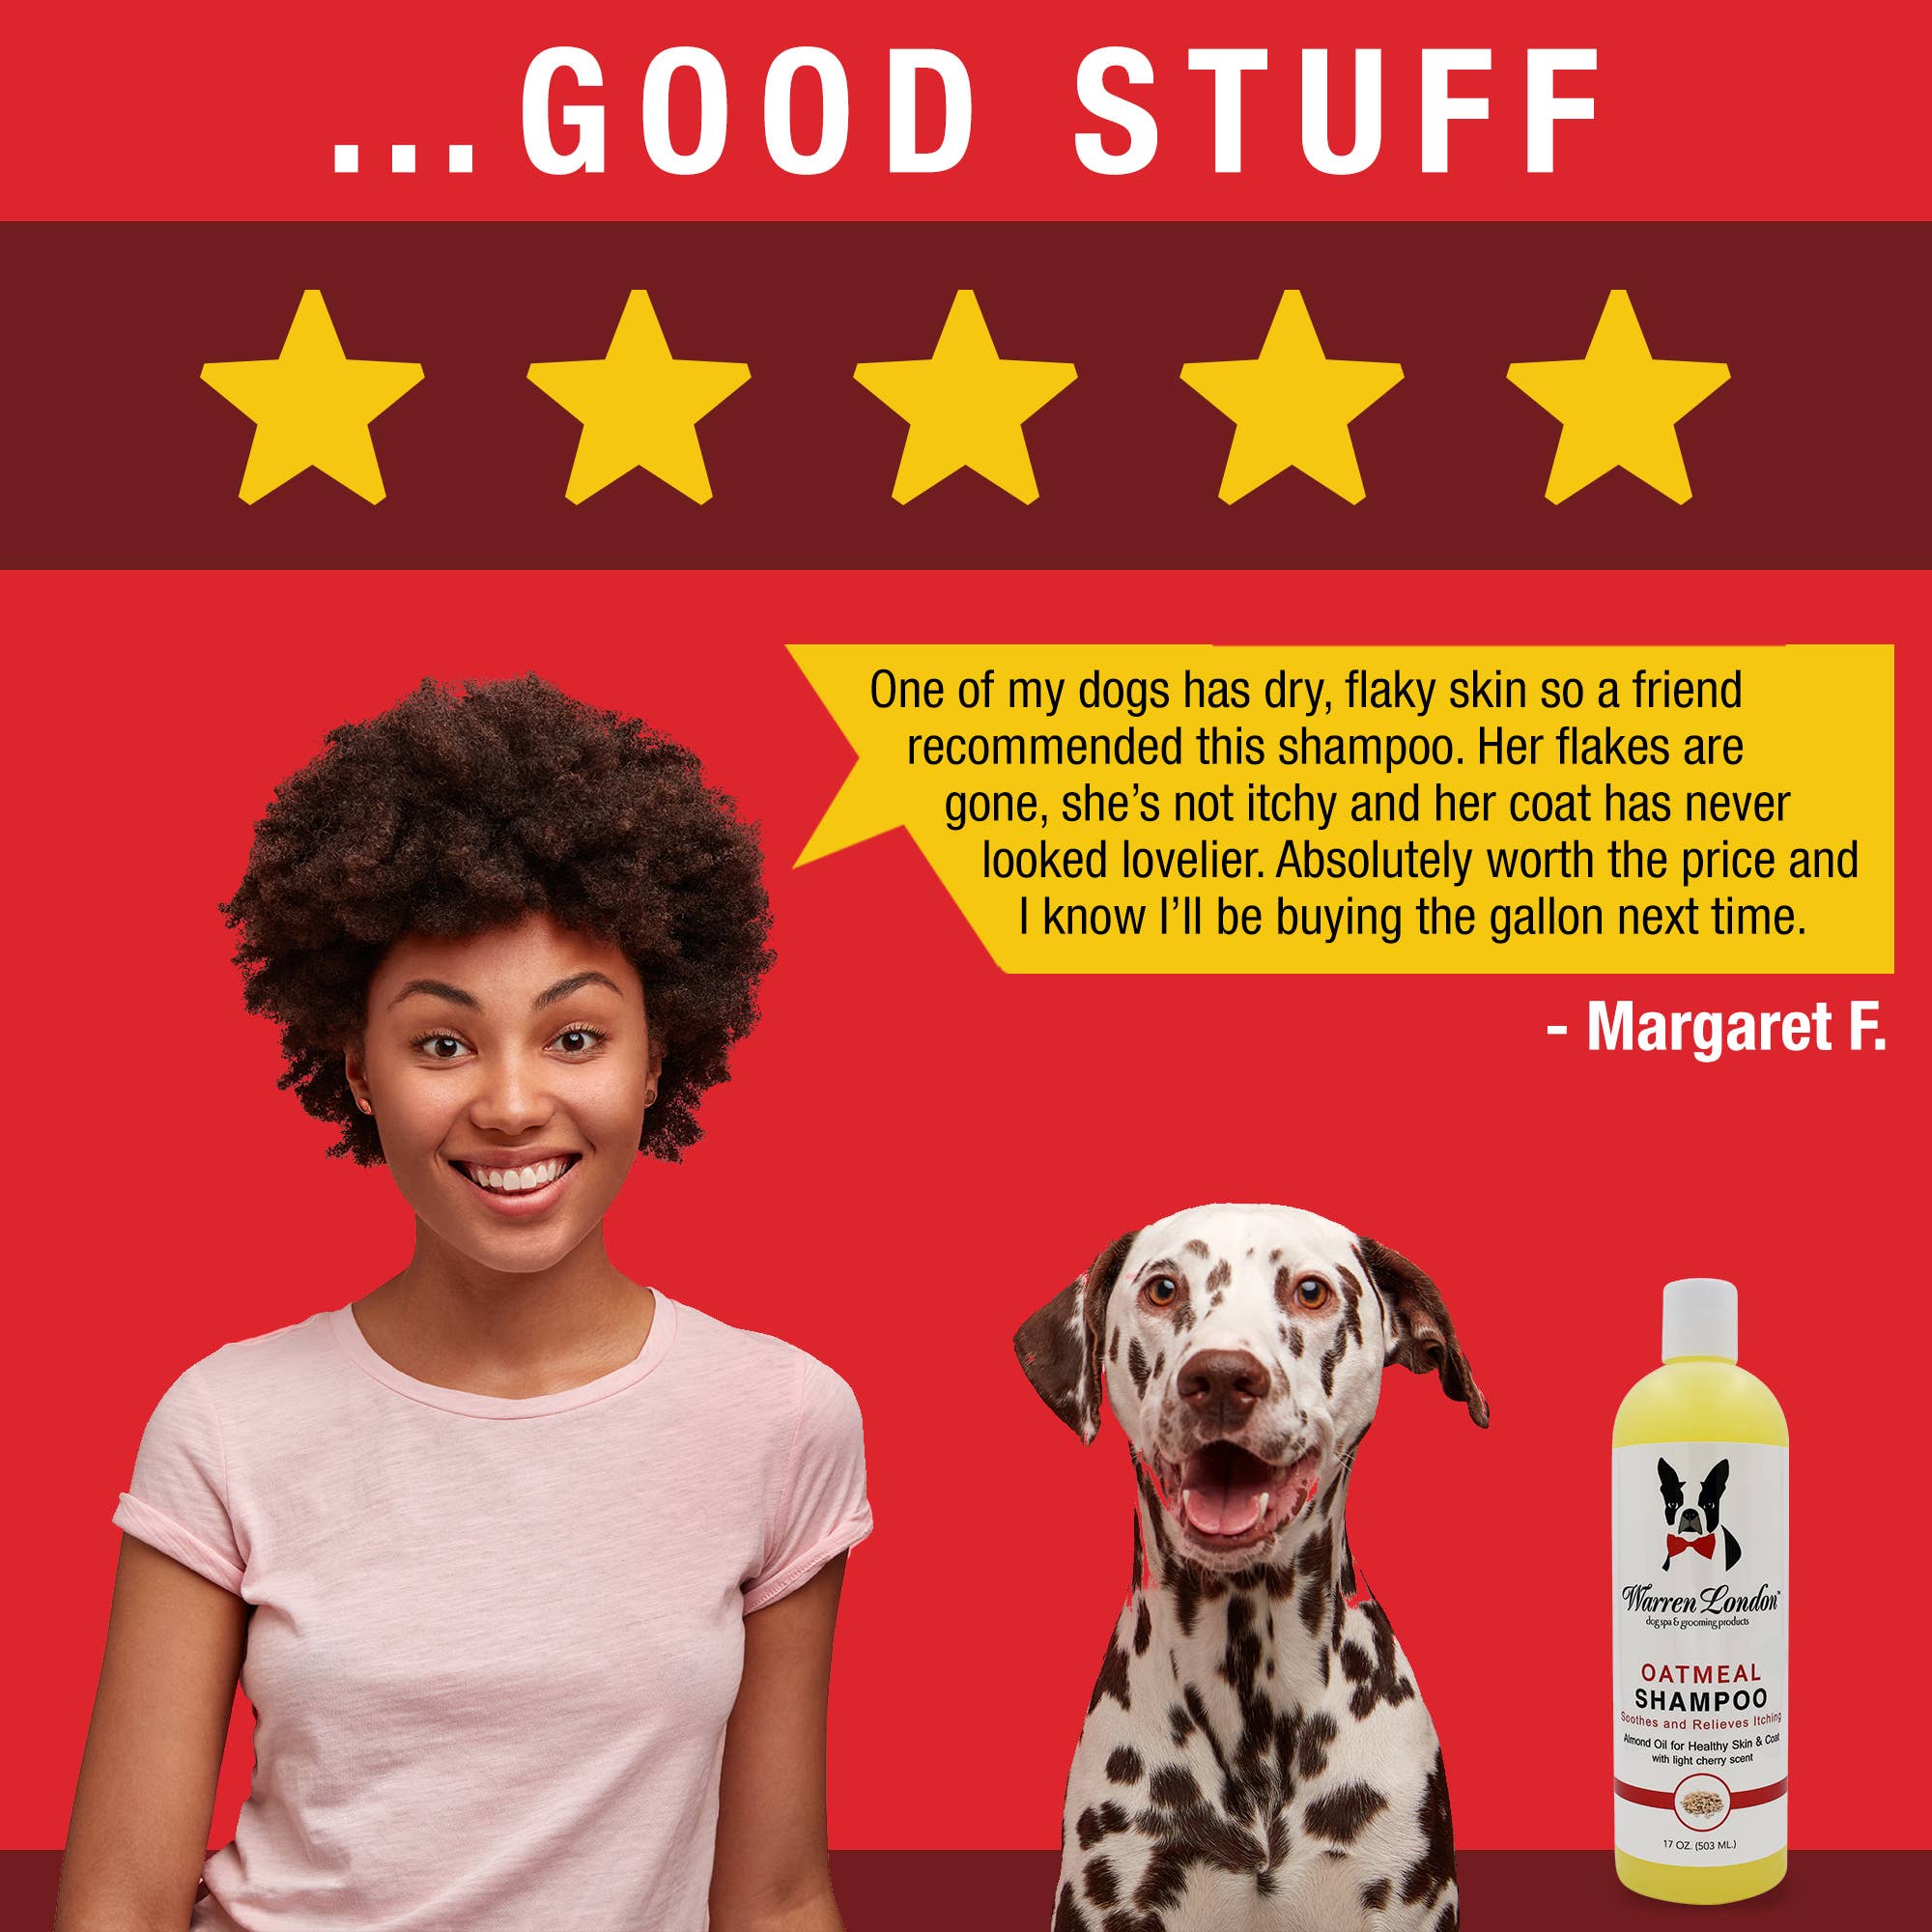 Warren London Dog Products - Shampoo: Oatmeal - 2 Sizes